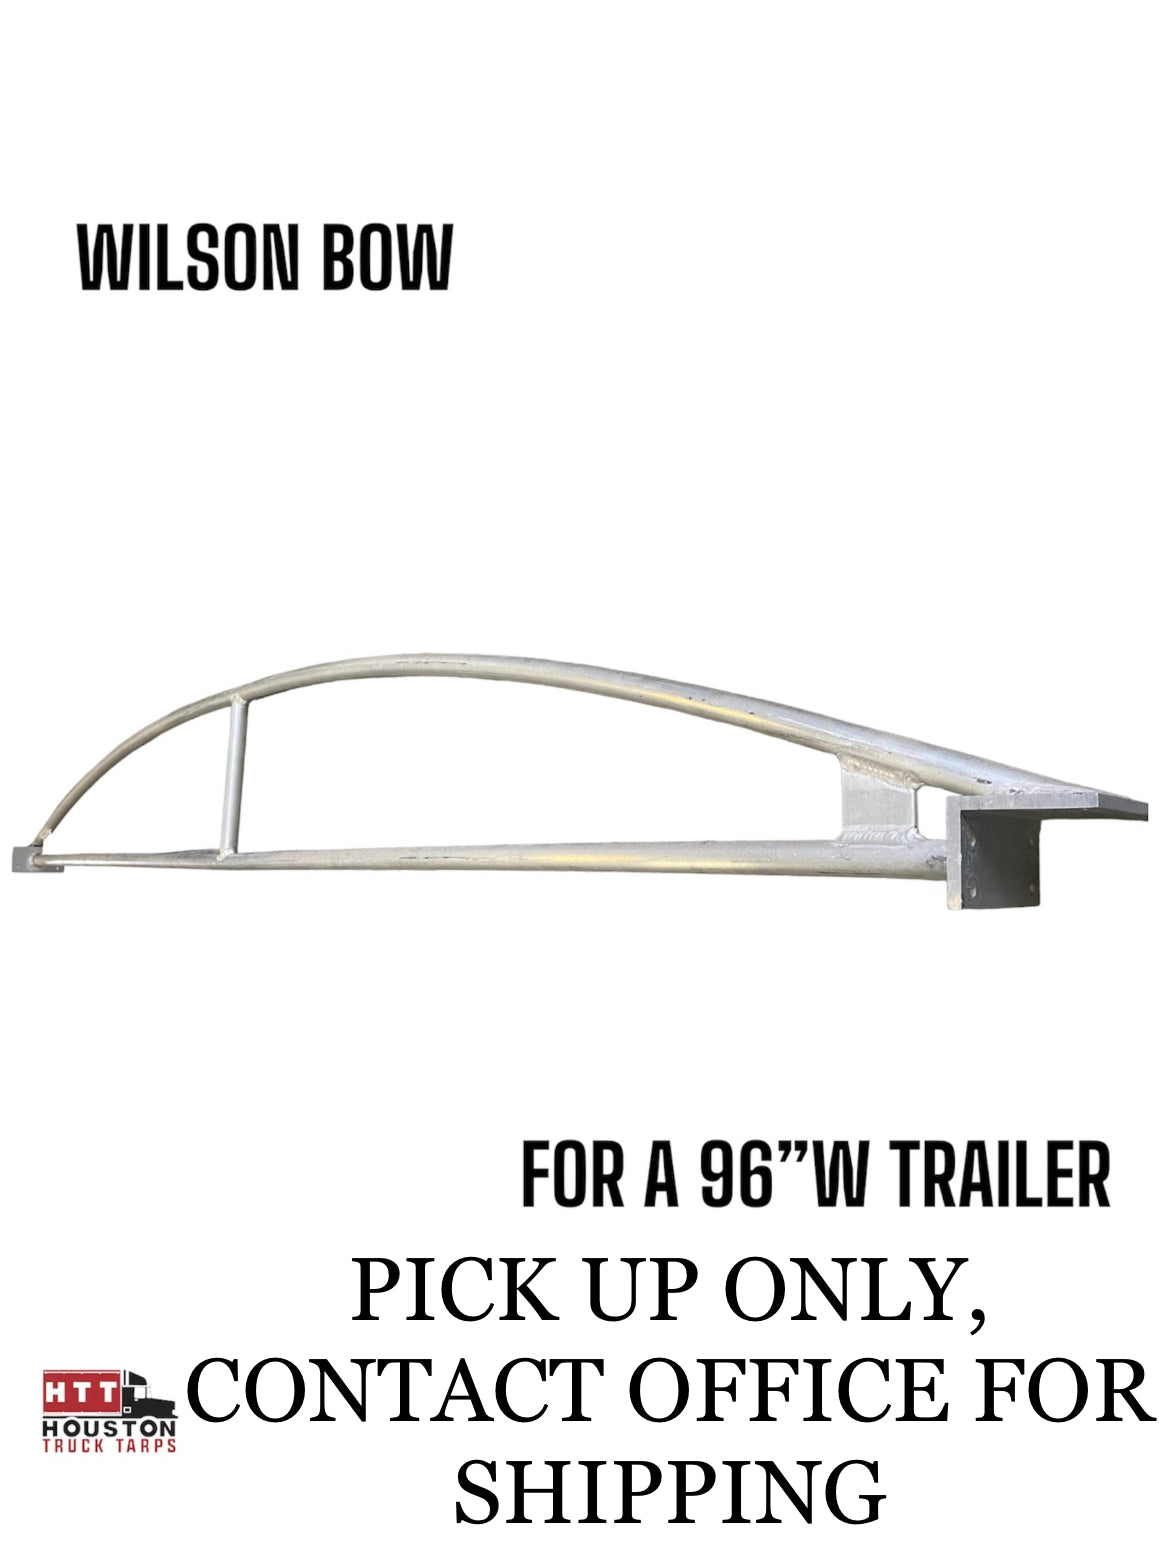 WILSON Bow For 96” Trailer